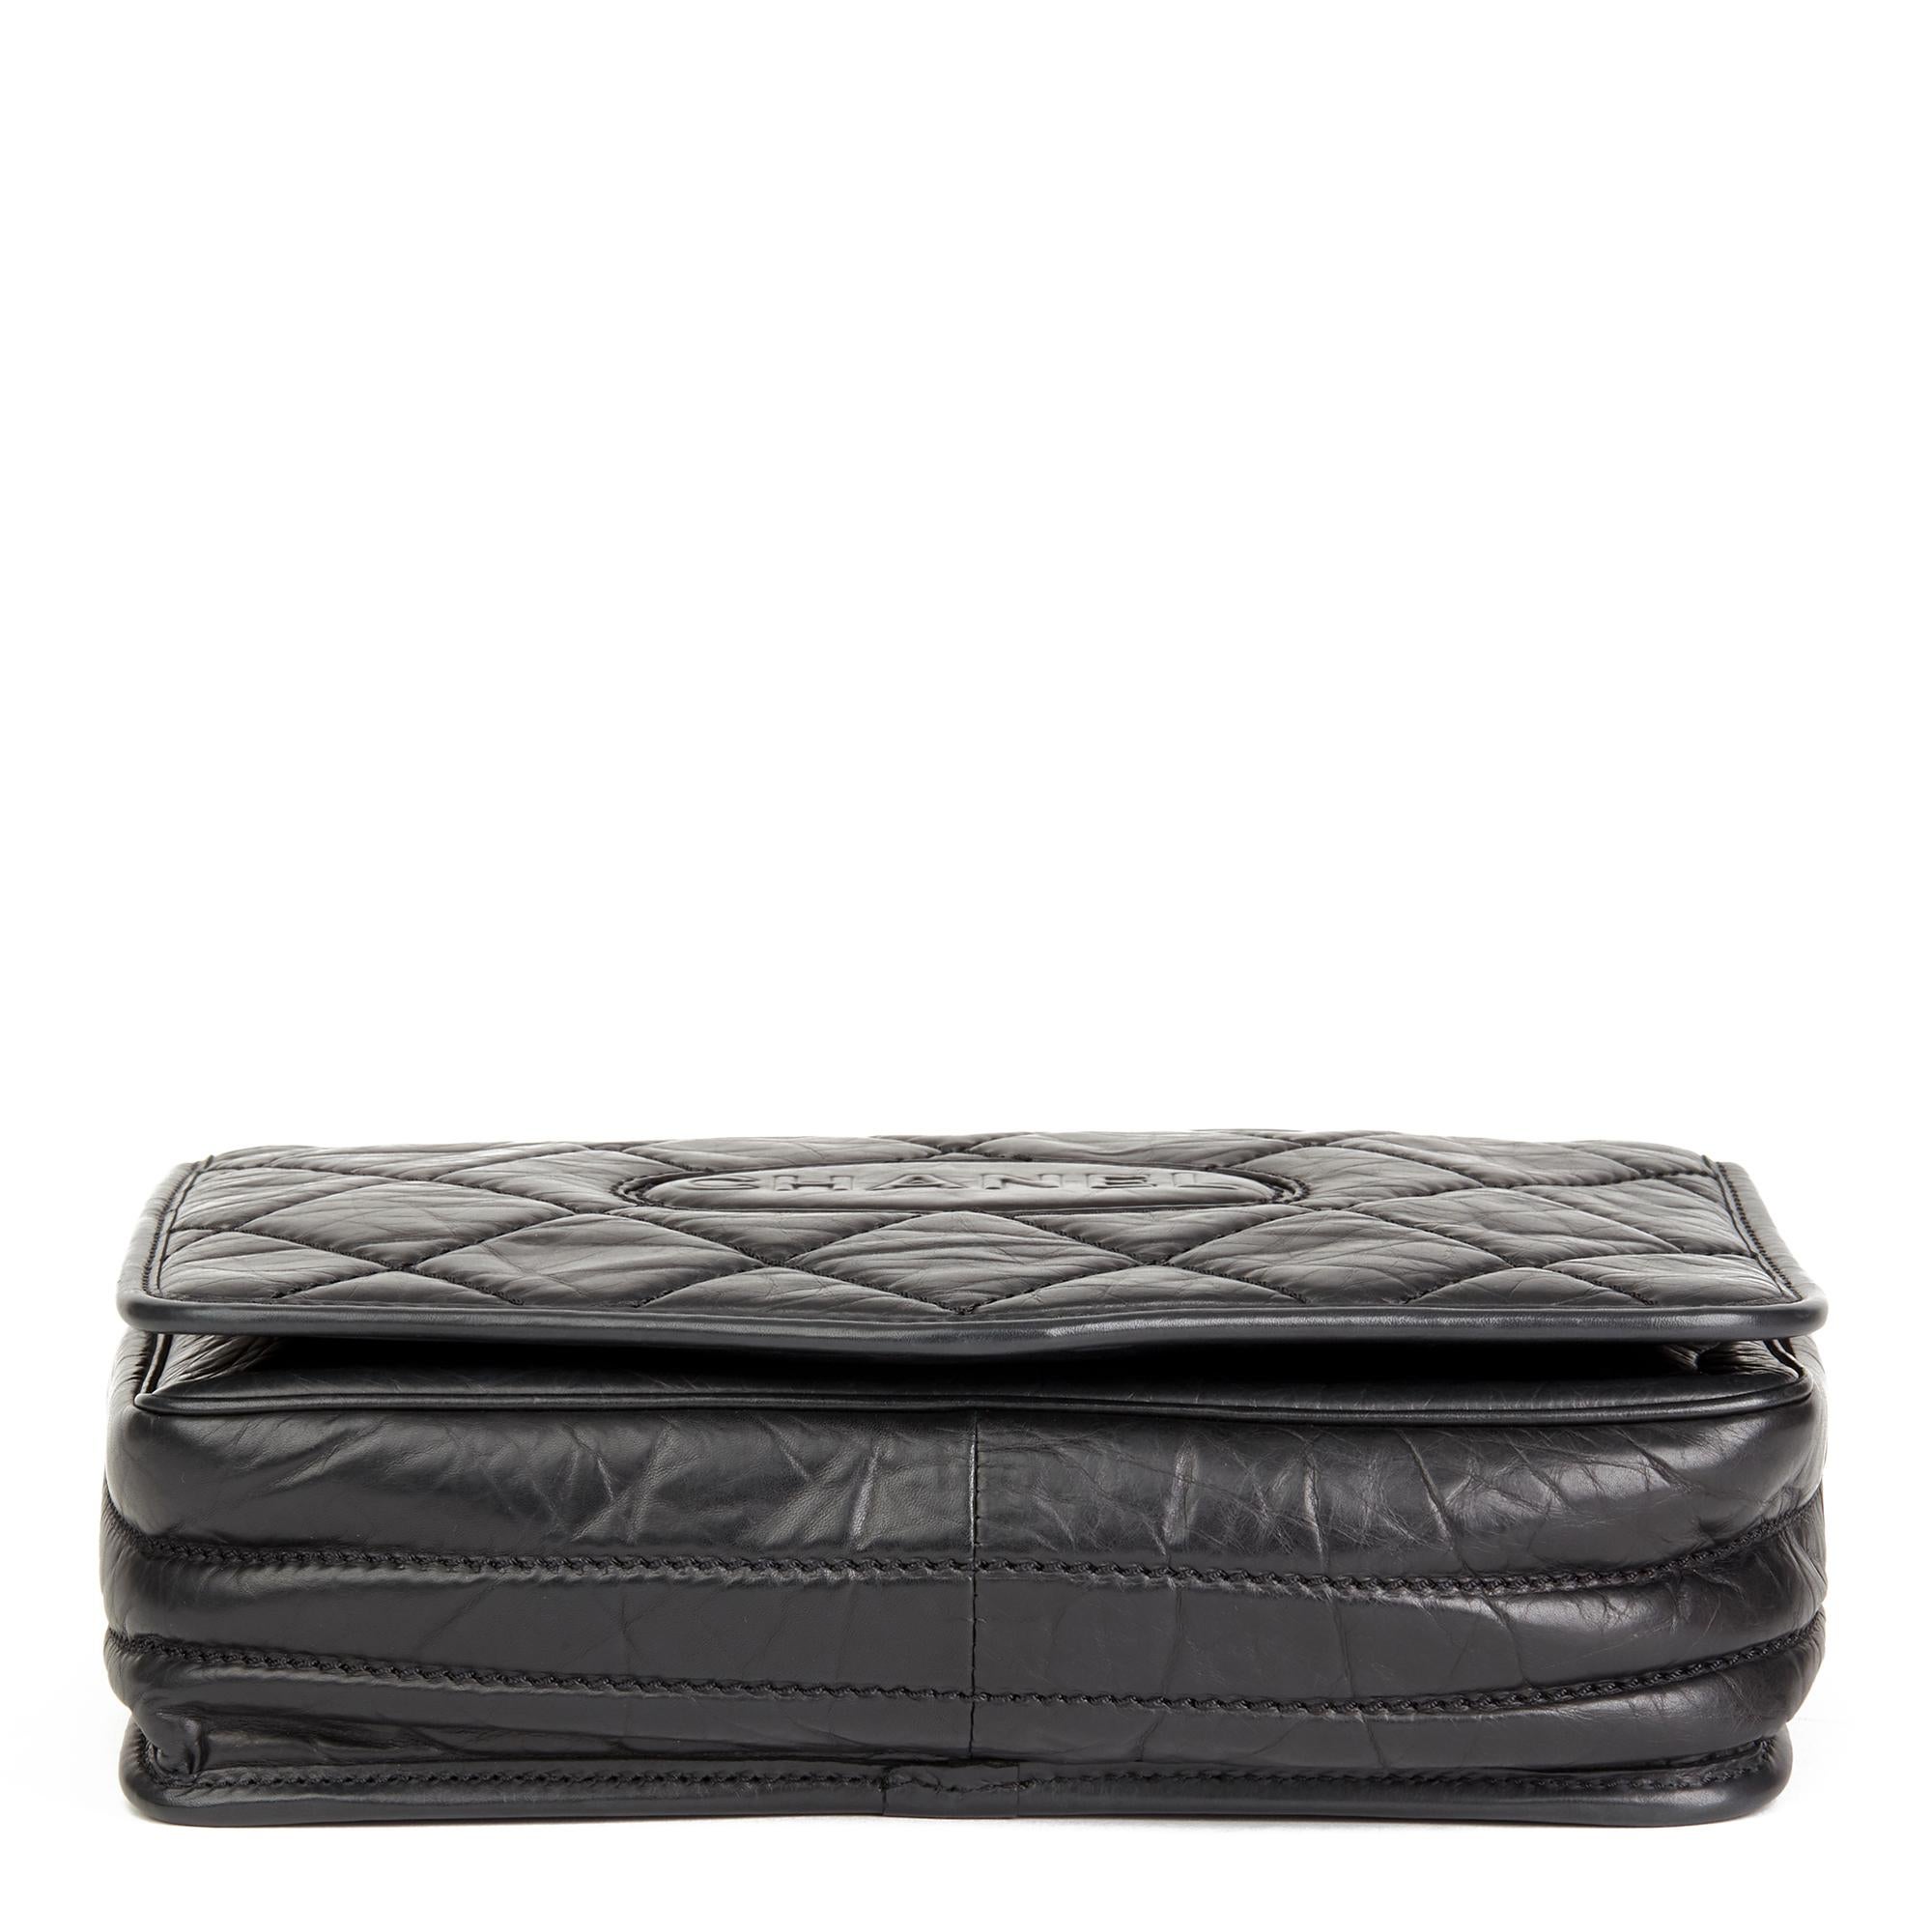 2005 Chanel Black Quilted Aged Calfskin Leather Timeless Messenger Flap Bag 1